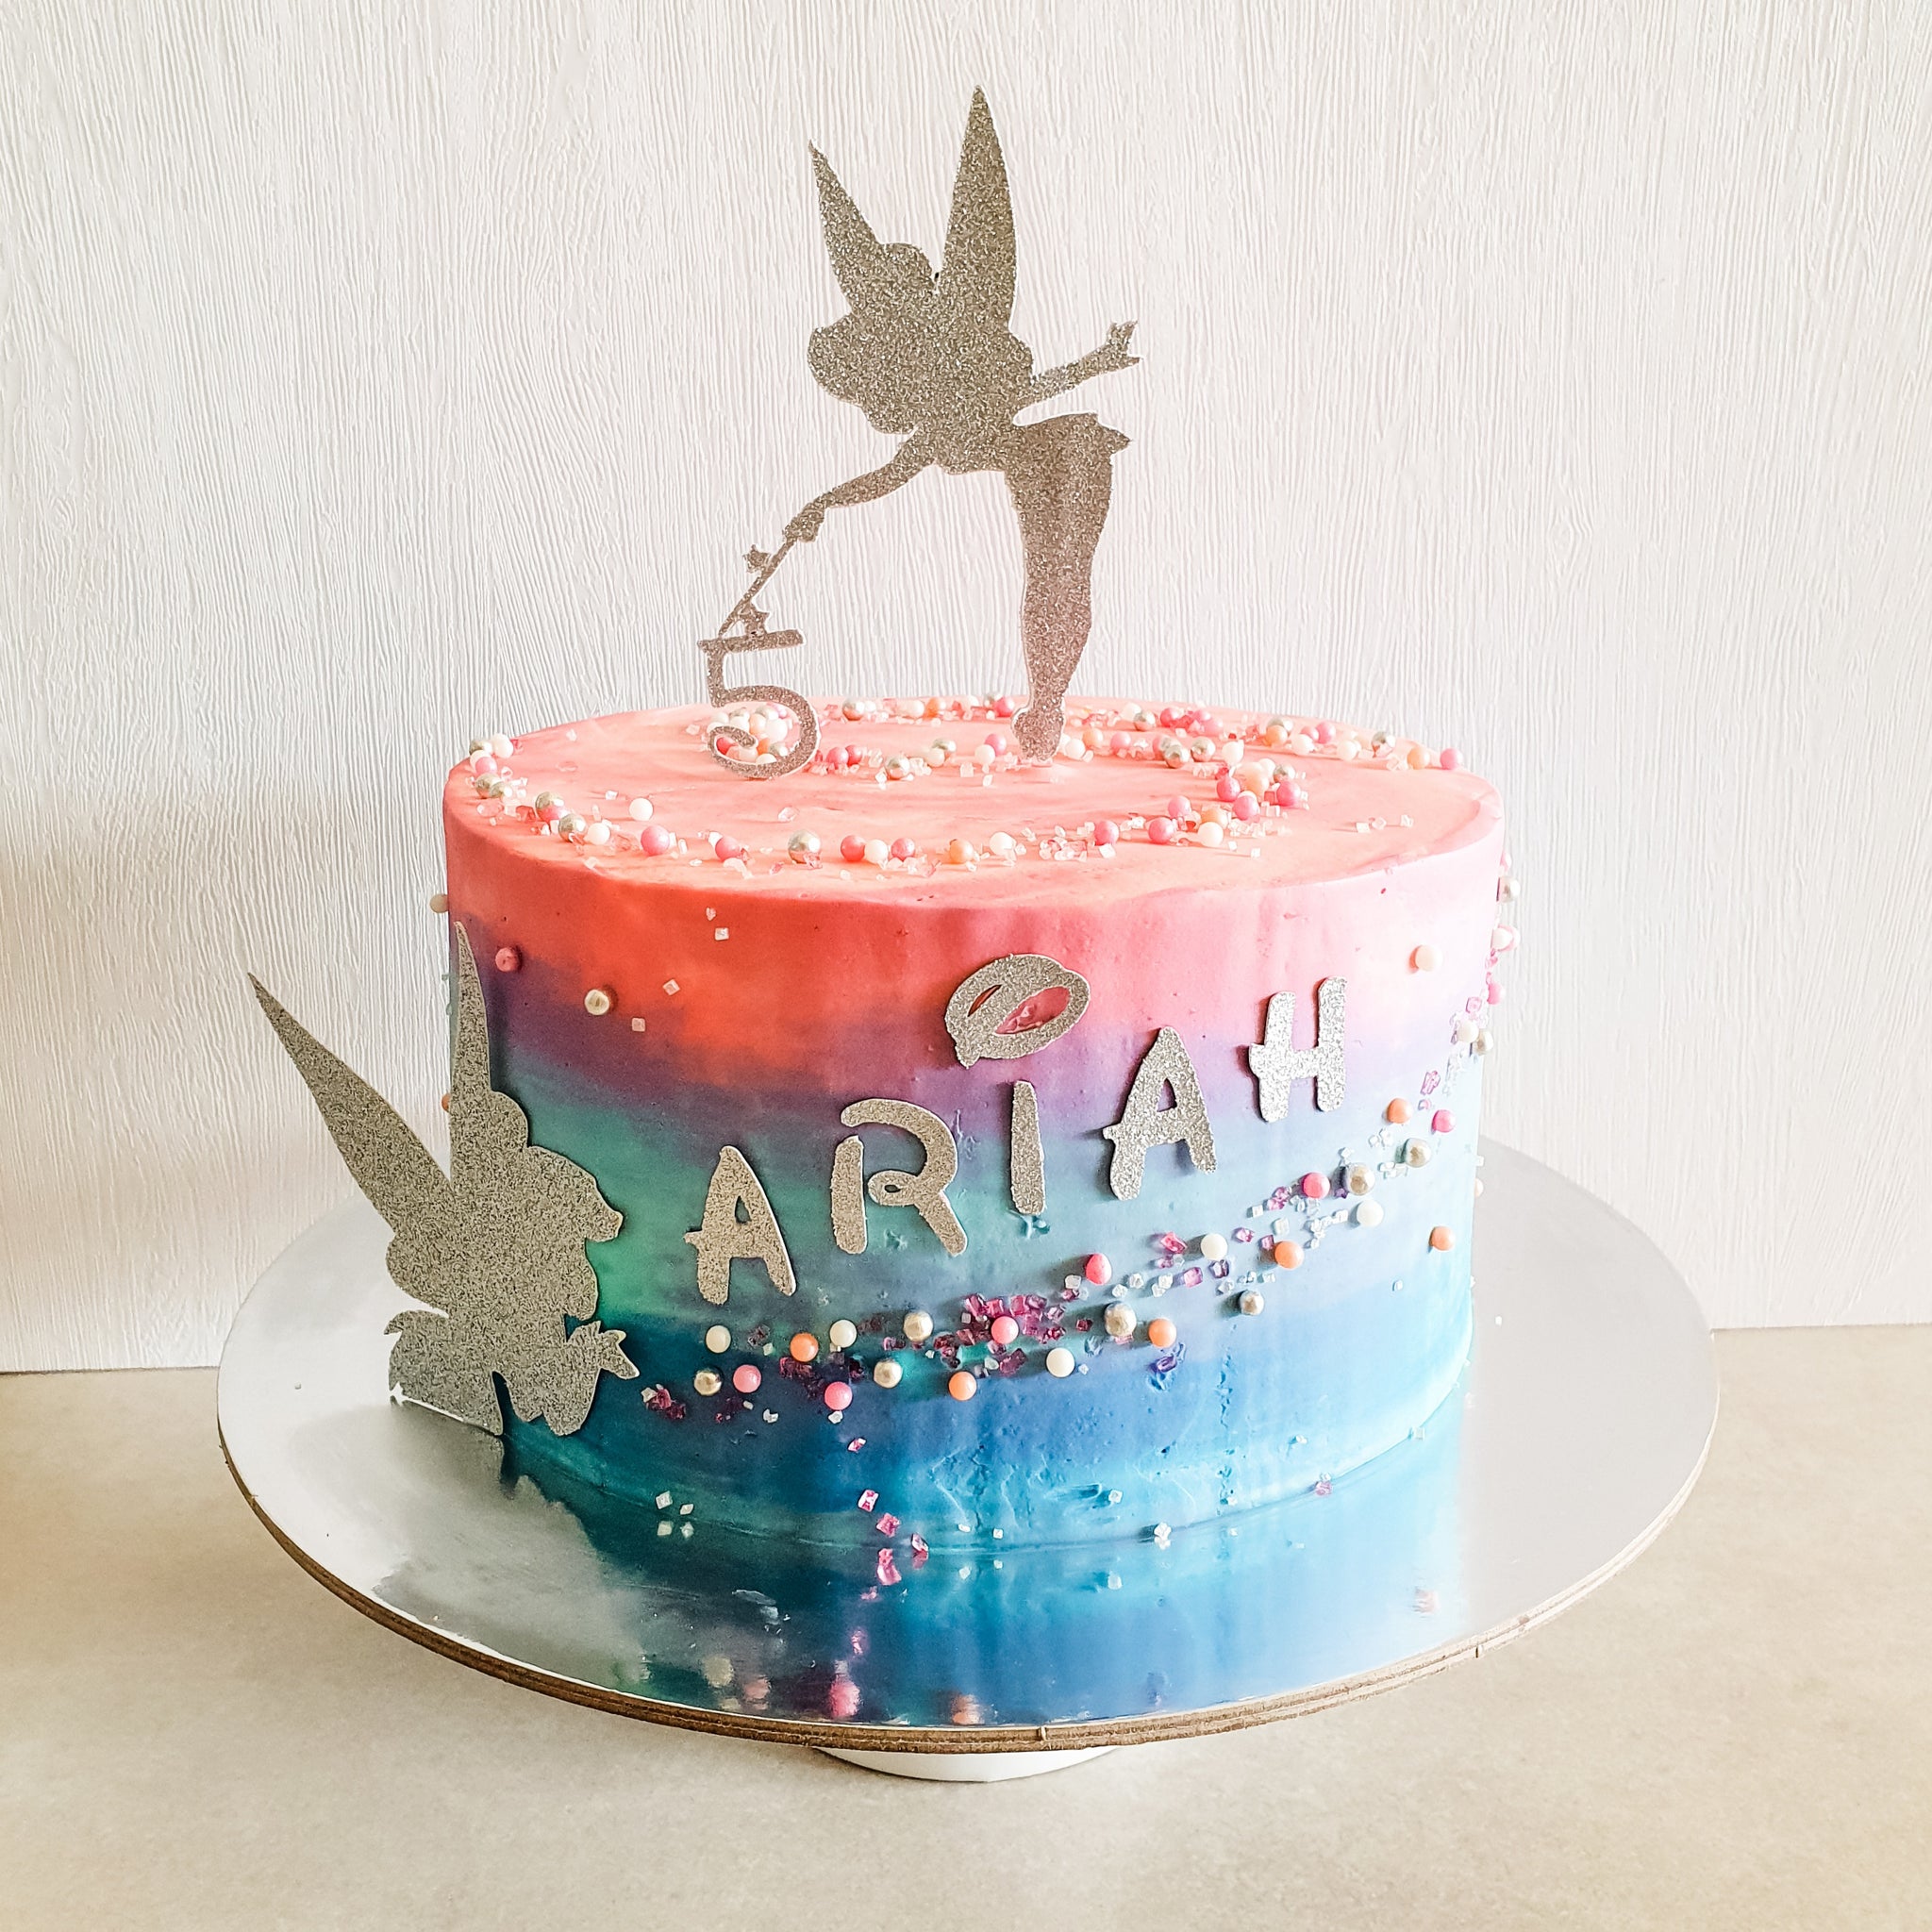 Fairy Artistic Bakery - Disney princess themed cake #disney #princess #cake  #crown #roses #cake #cakesgram #cakesinsta #cakesofinstagram #instafood  #instacake #fairyartisticbakery #noveltycake #cakemaker #cakedecorating  #cakeinspo #cakeartist ...